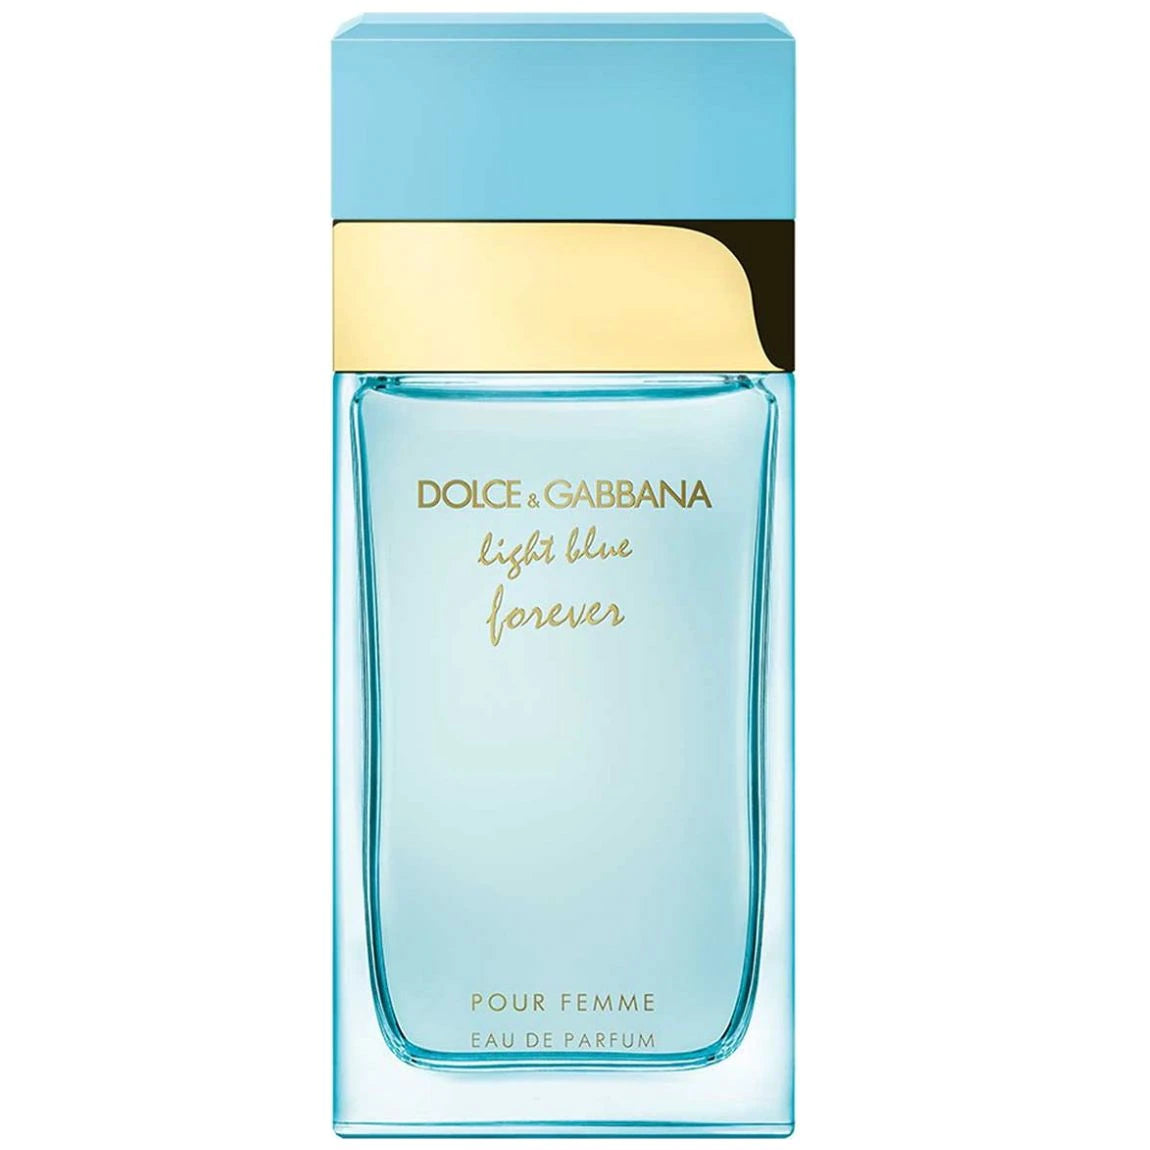 Dolce Gabbana Light Blue Forever Perfume Para Mujer 100ml Eau de Parfum